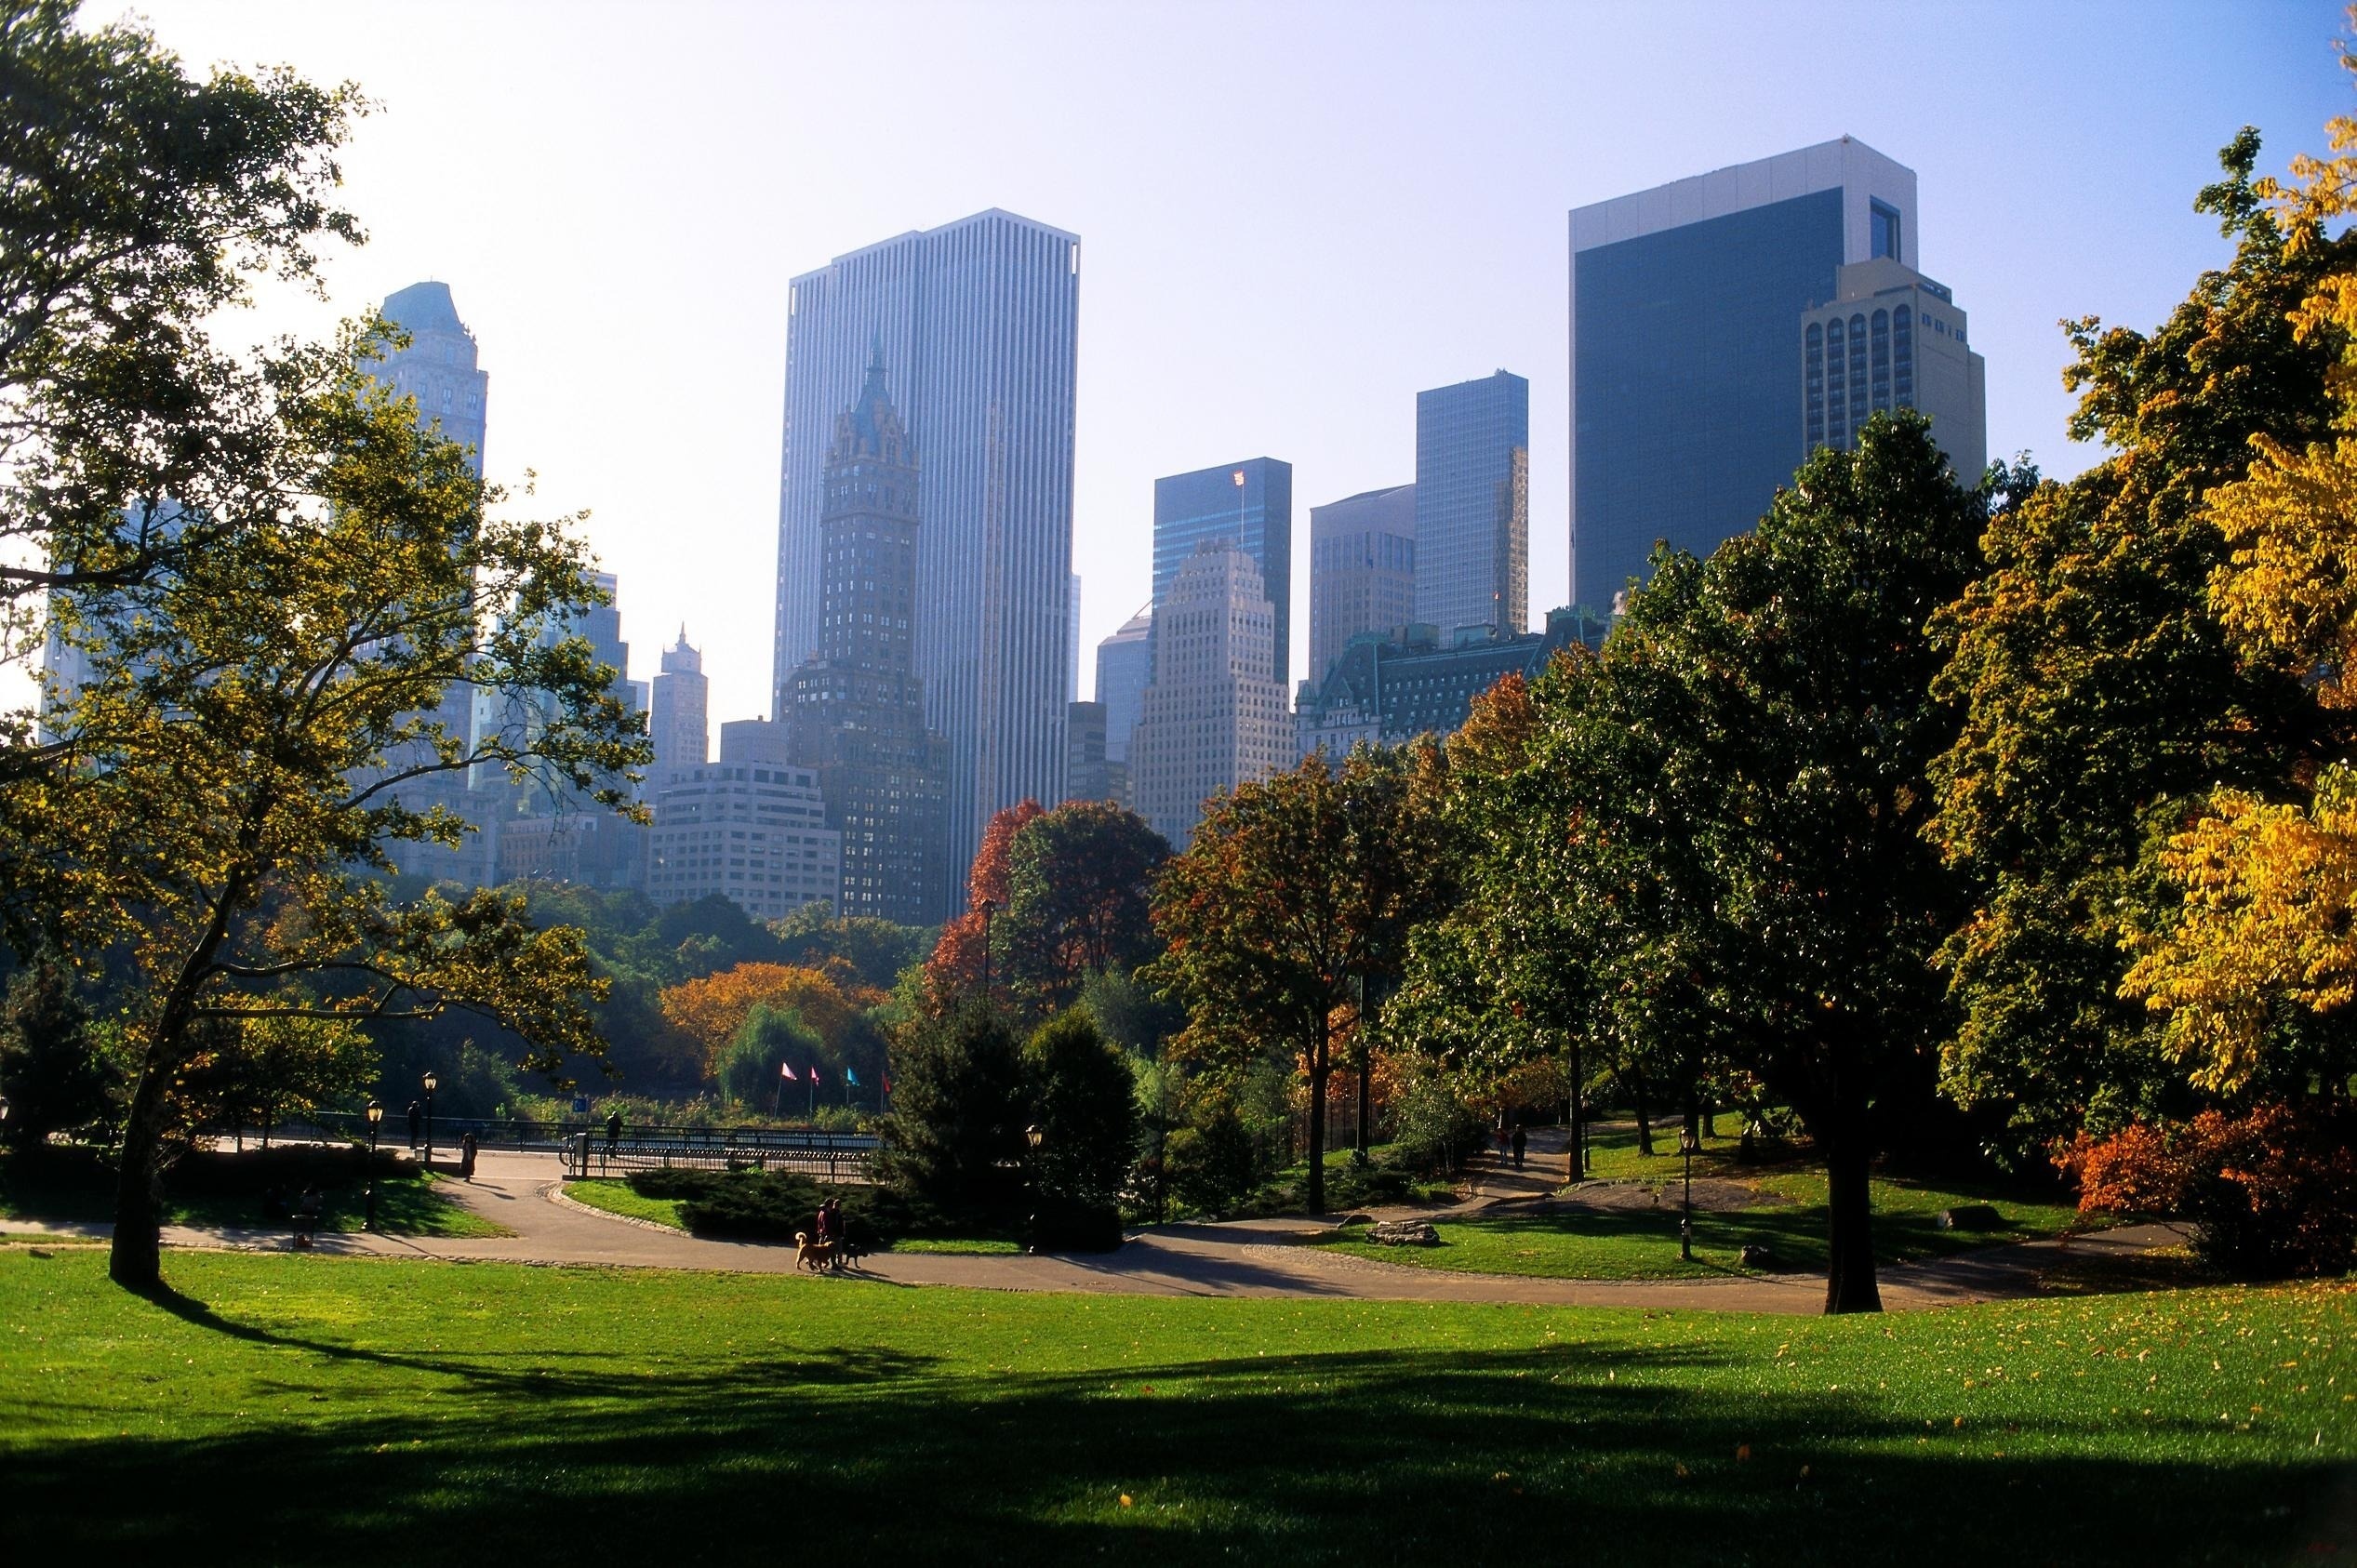 Nature in the city is. Централ парк Нью-Йорк деревья. Центральный парк, Нью-Йорк, США. Центральный парк (г. Нью-Йорк, Манхэттен). Центральный парк ньйорк.